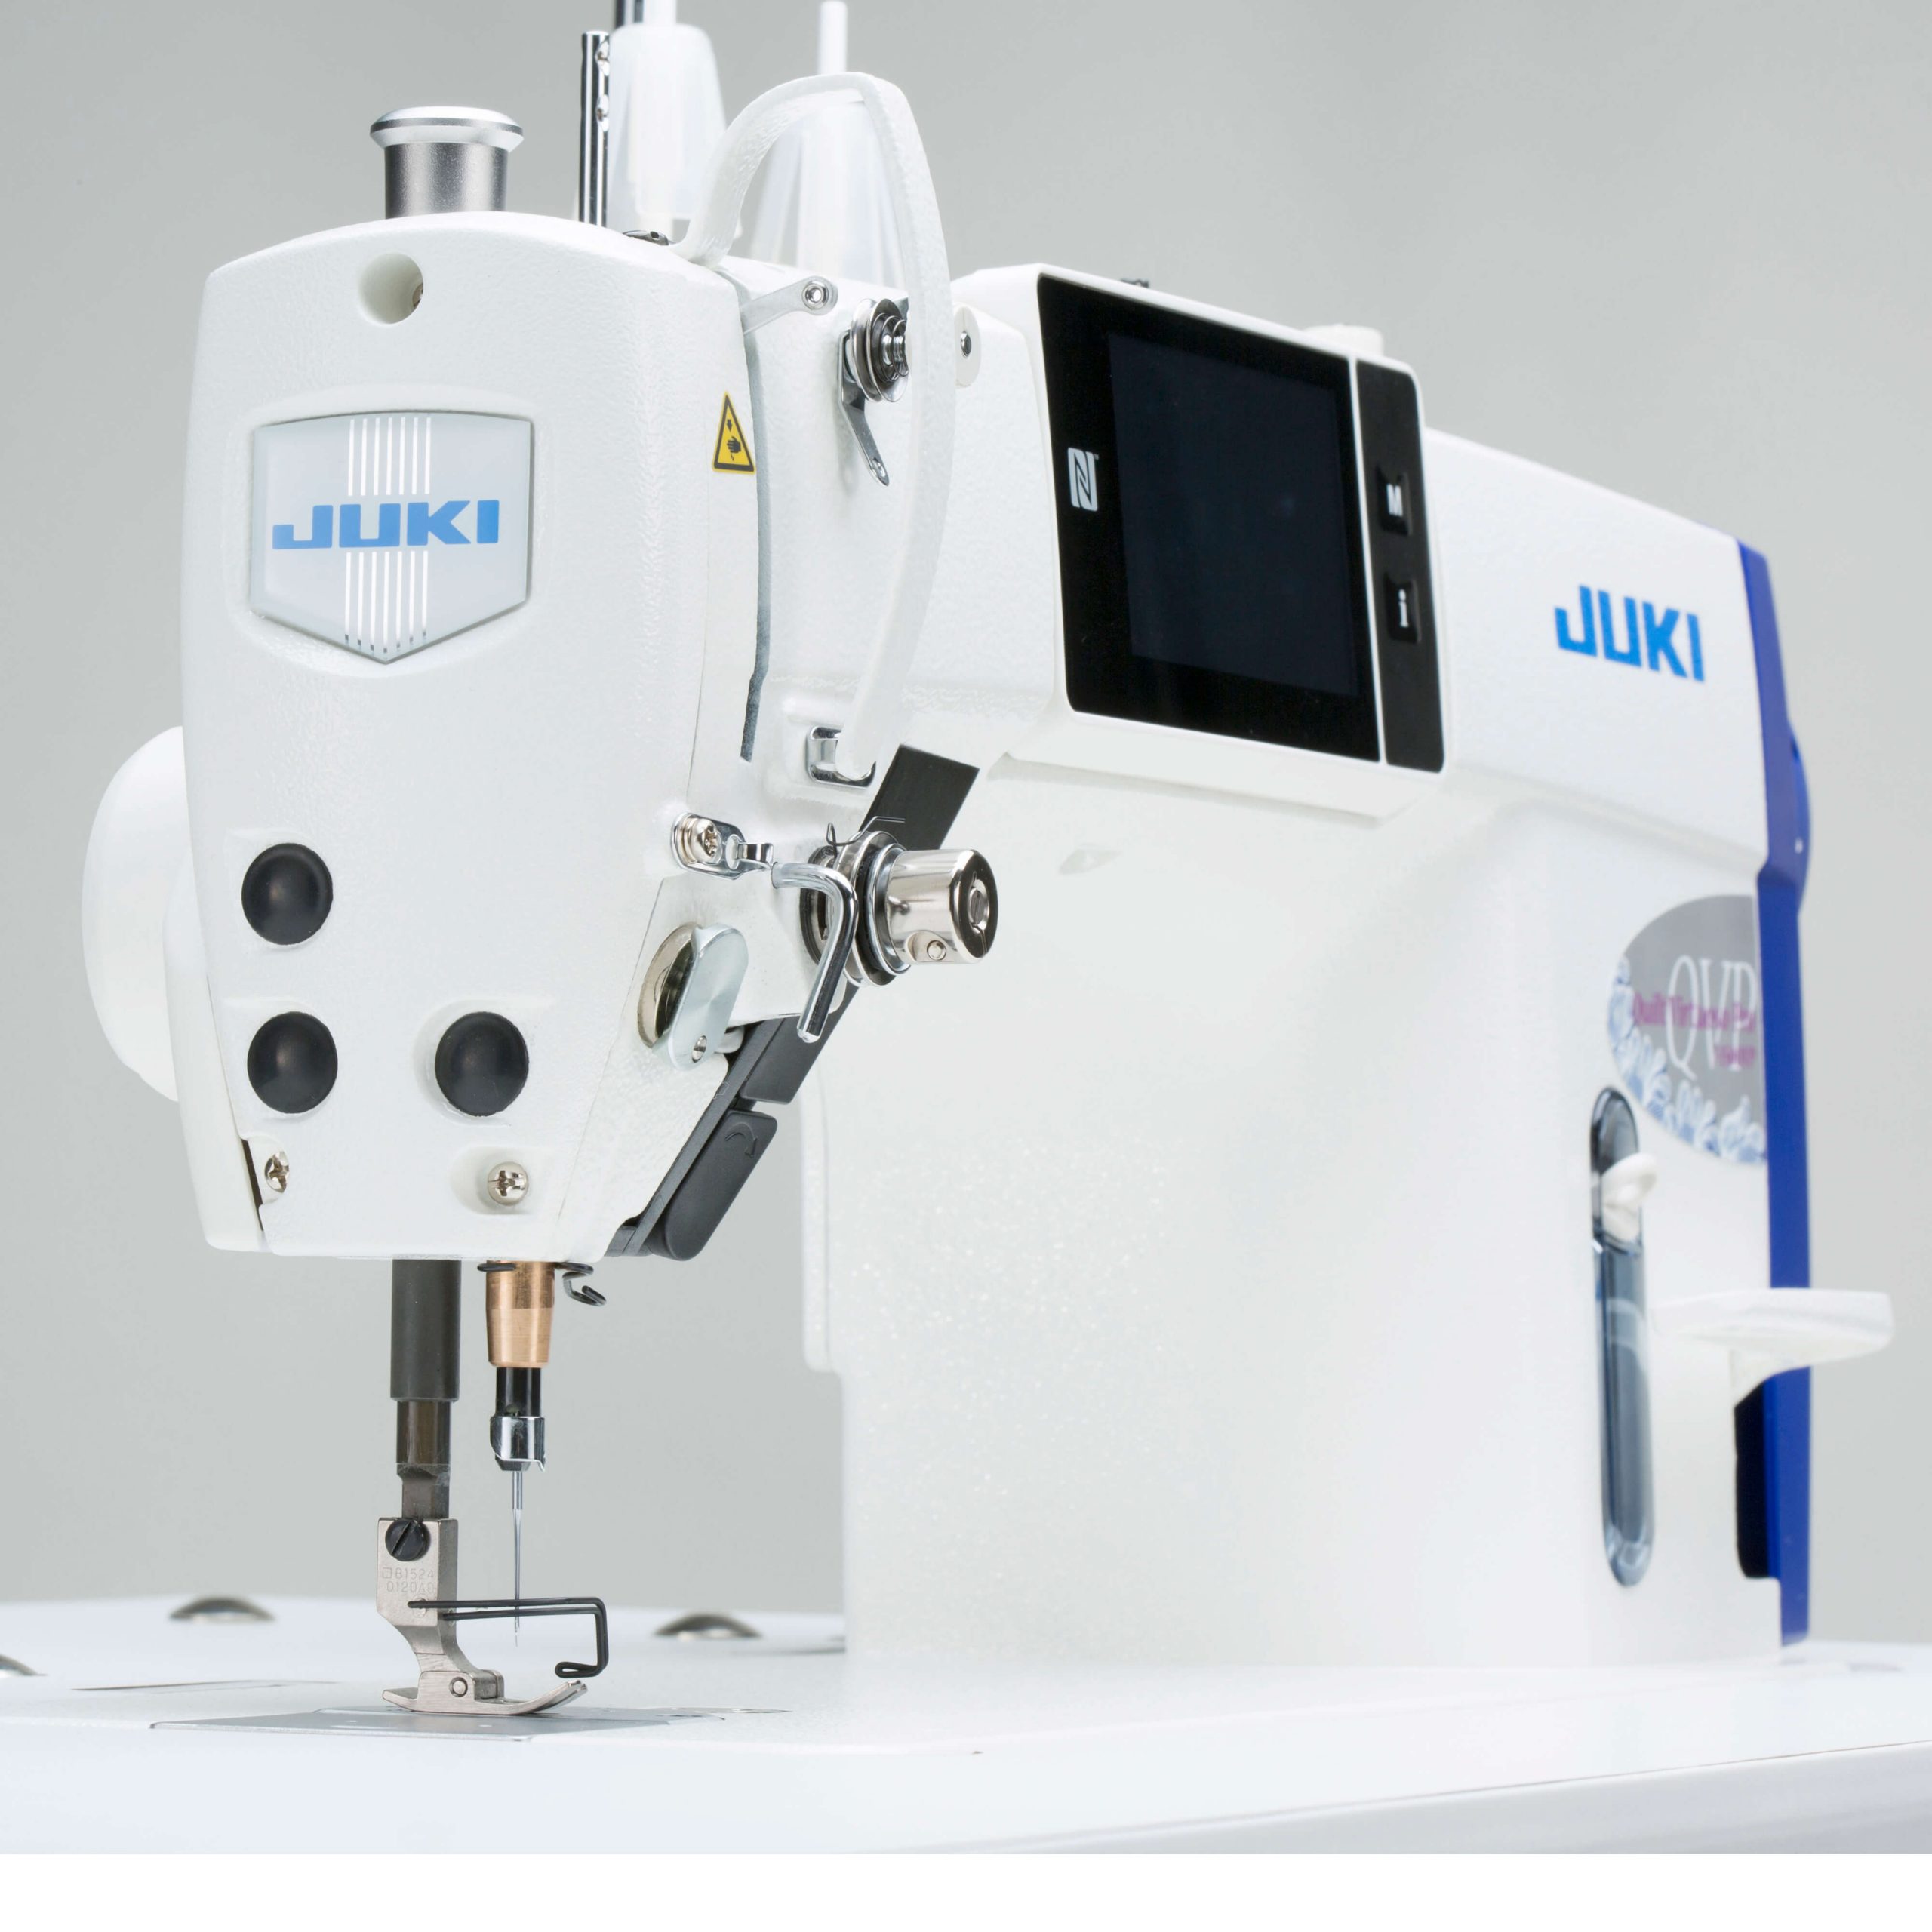 Industrial Juki Sewing Machines - Juki Junkies